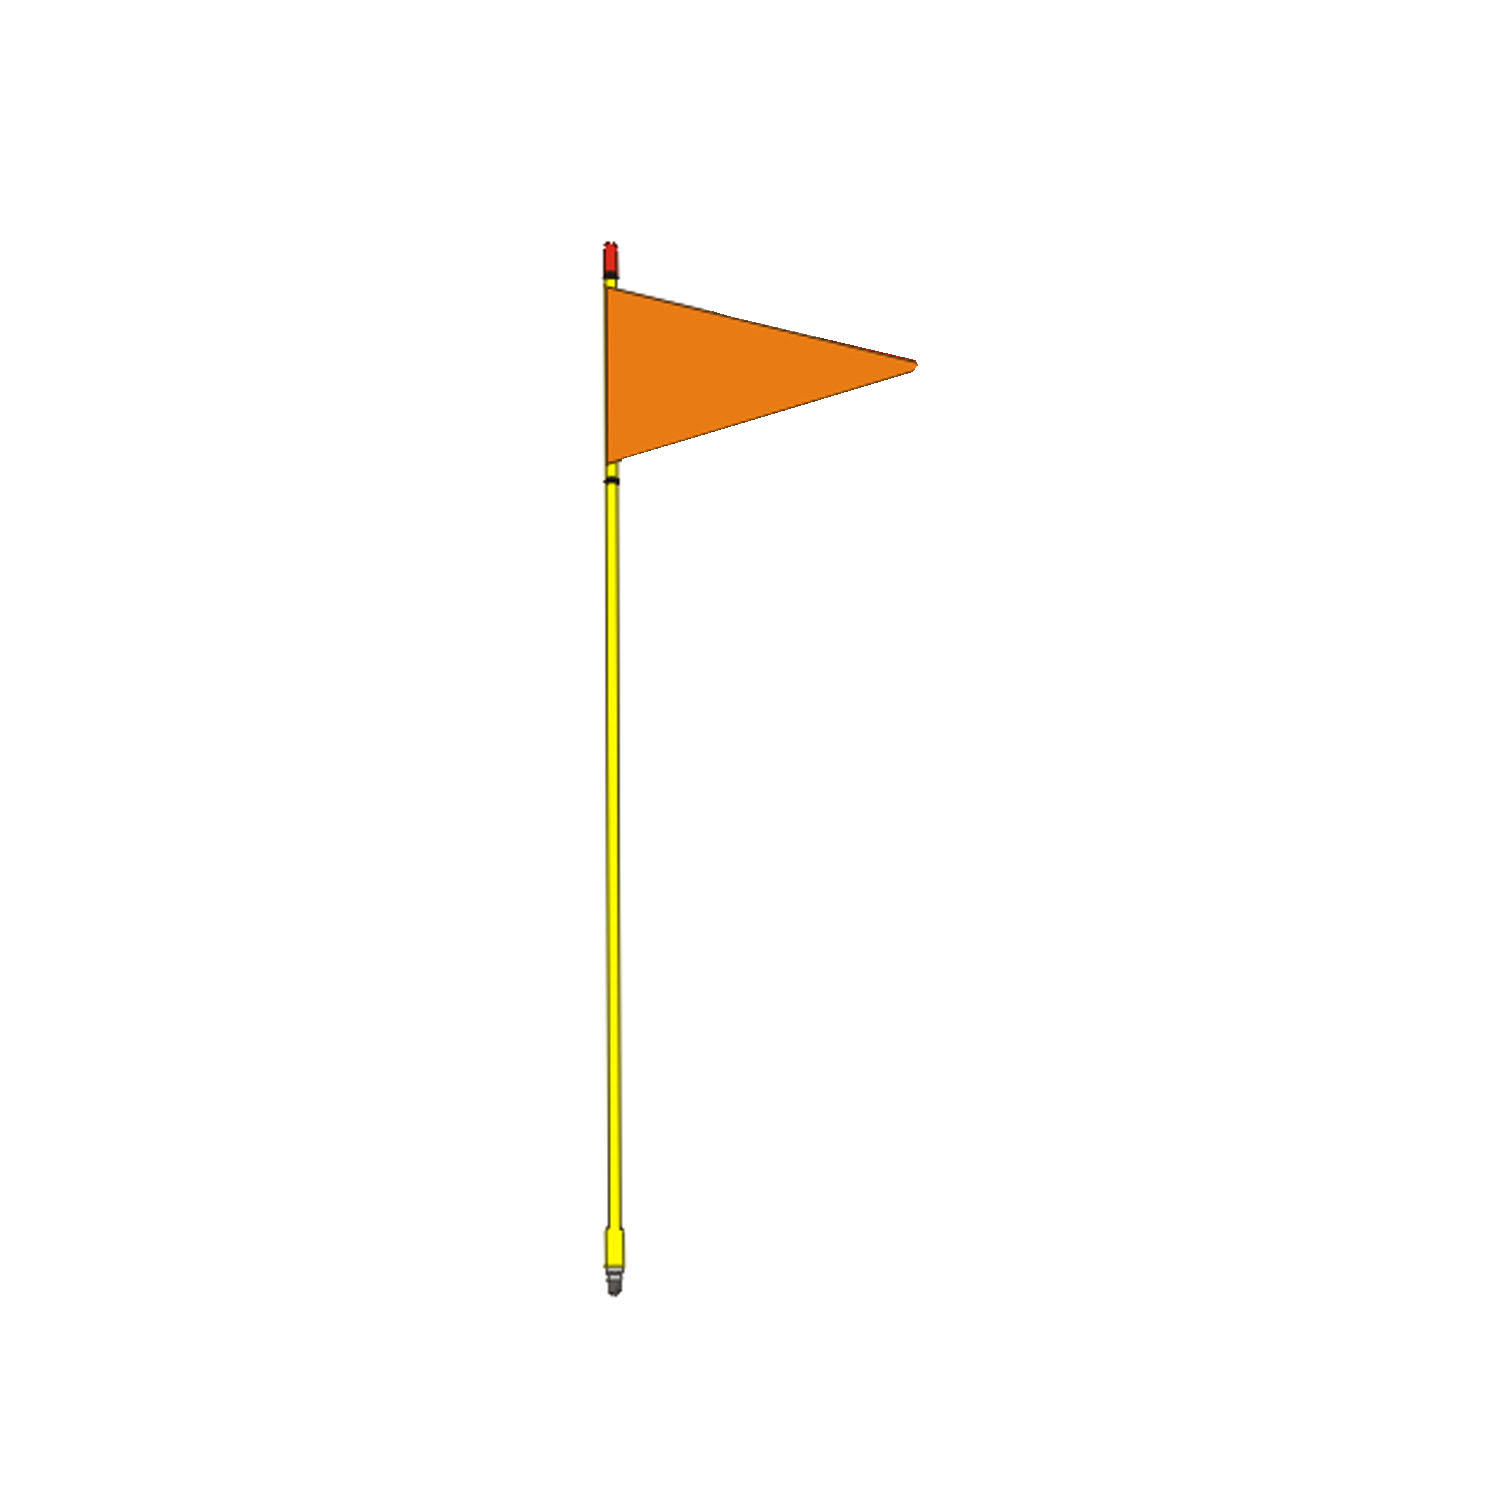 FIRESTIK - F4-G 4 FOOT YELLOW FLAGSTICK WITH ORANGE TRIANGULAR SAFETY FLAG - STANDARD 3/8"-24 BASE THREADS